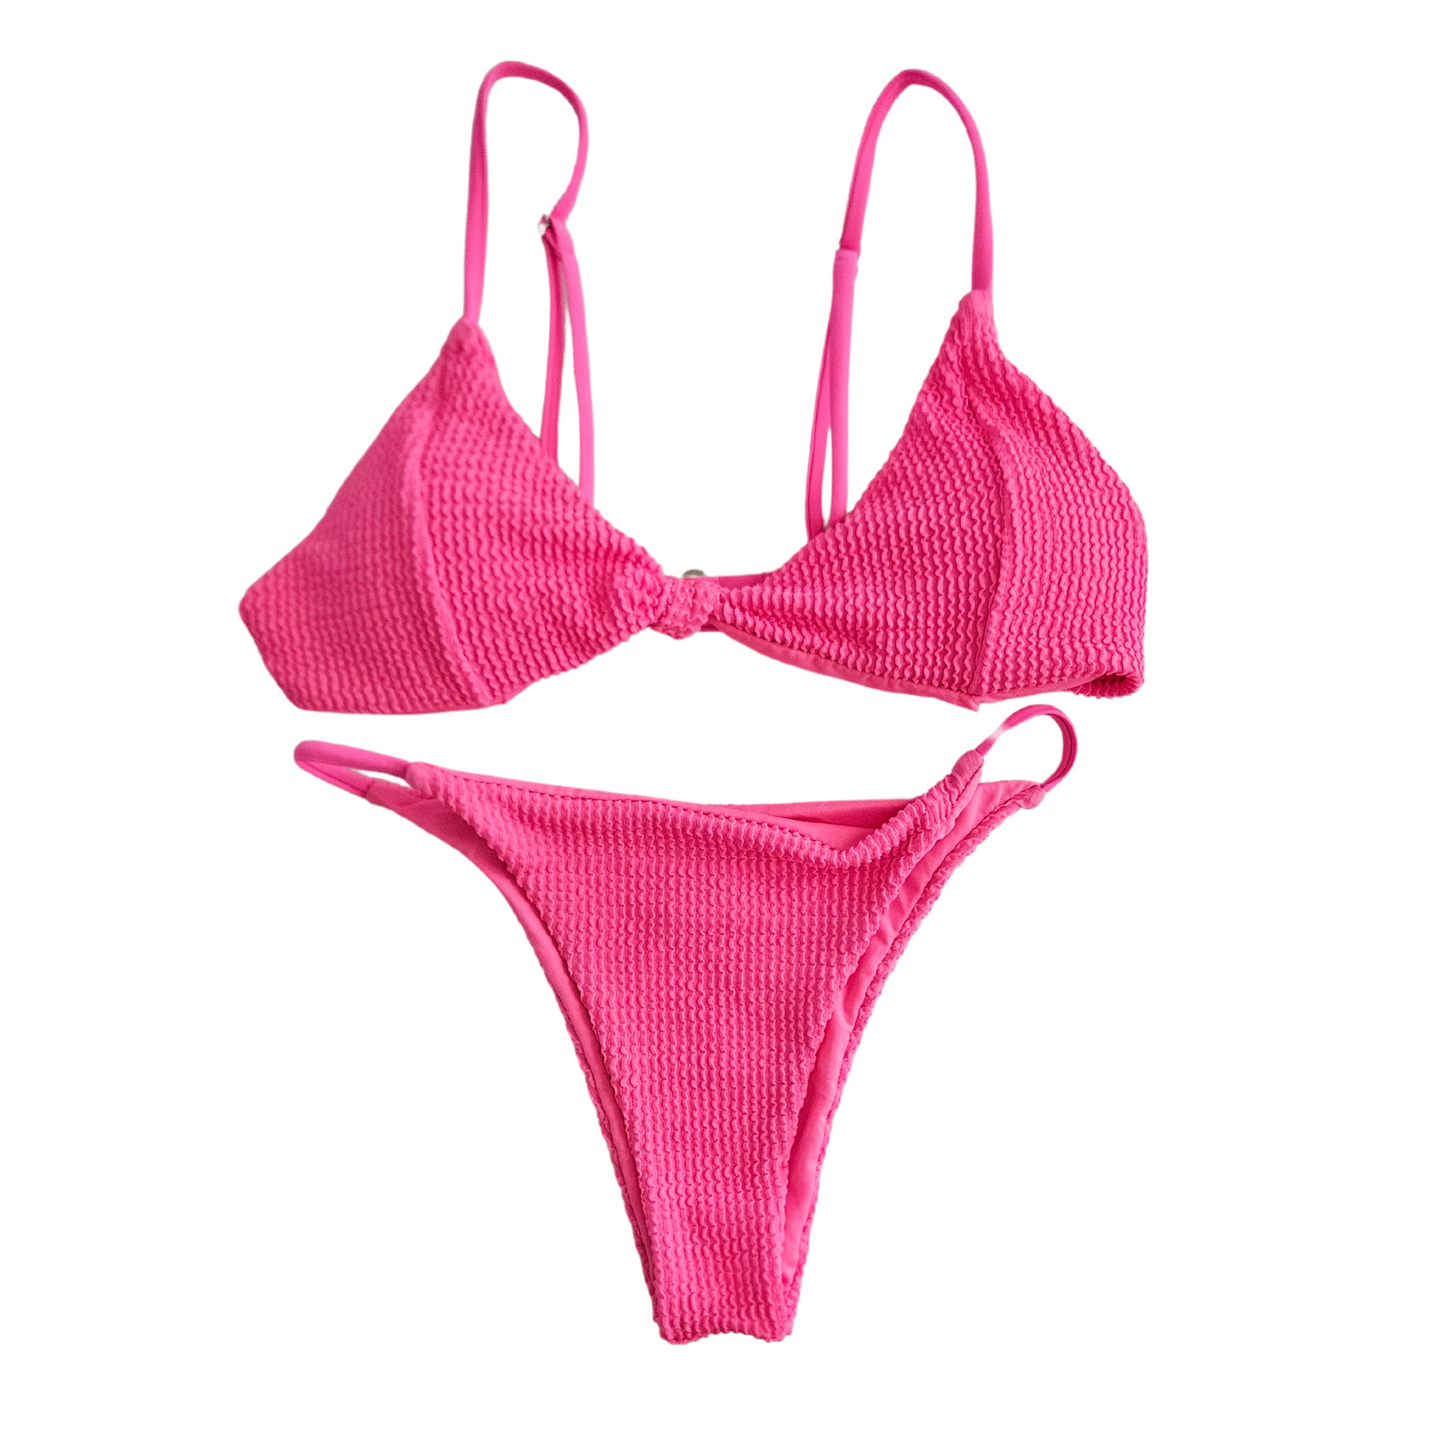 Pink Neon Textured Two-Piece Bikini by Rita Rosa